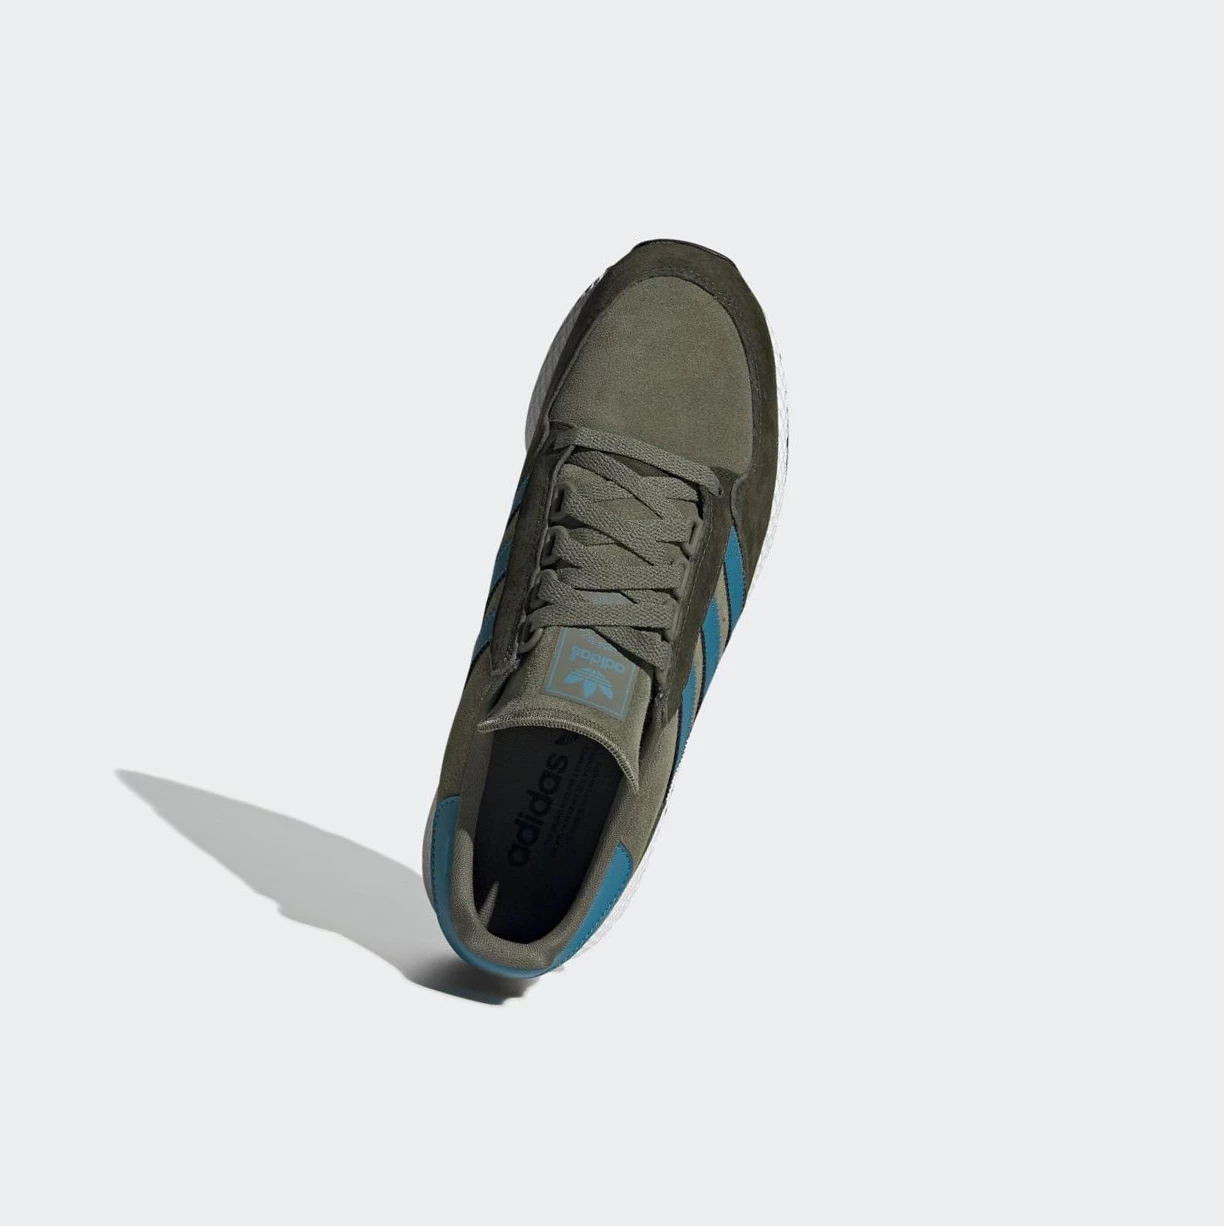 Originálne Topánky Adidas Forest Grove Damske Zelene | 175SKHDNUBK